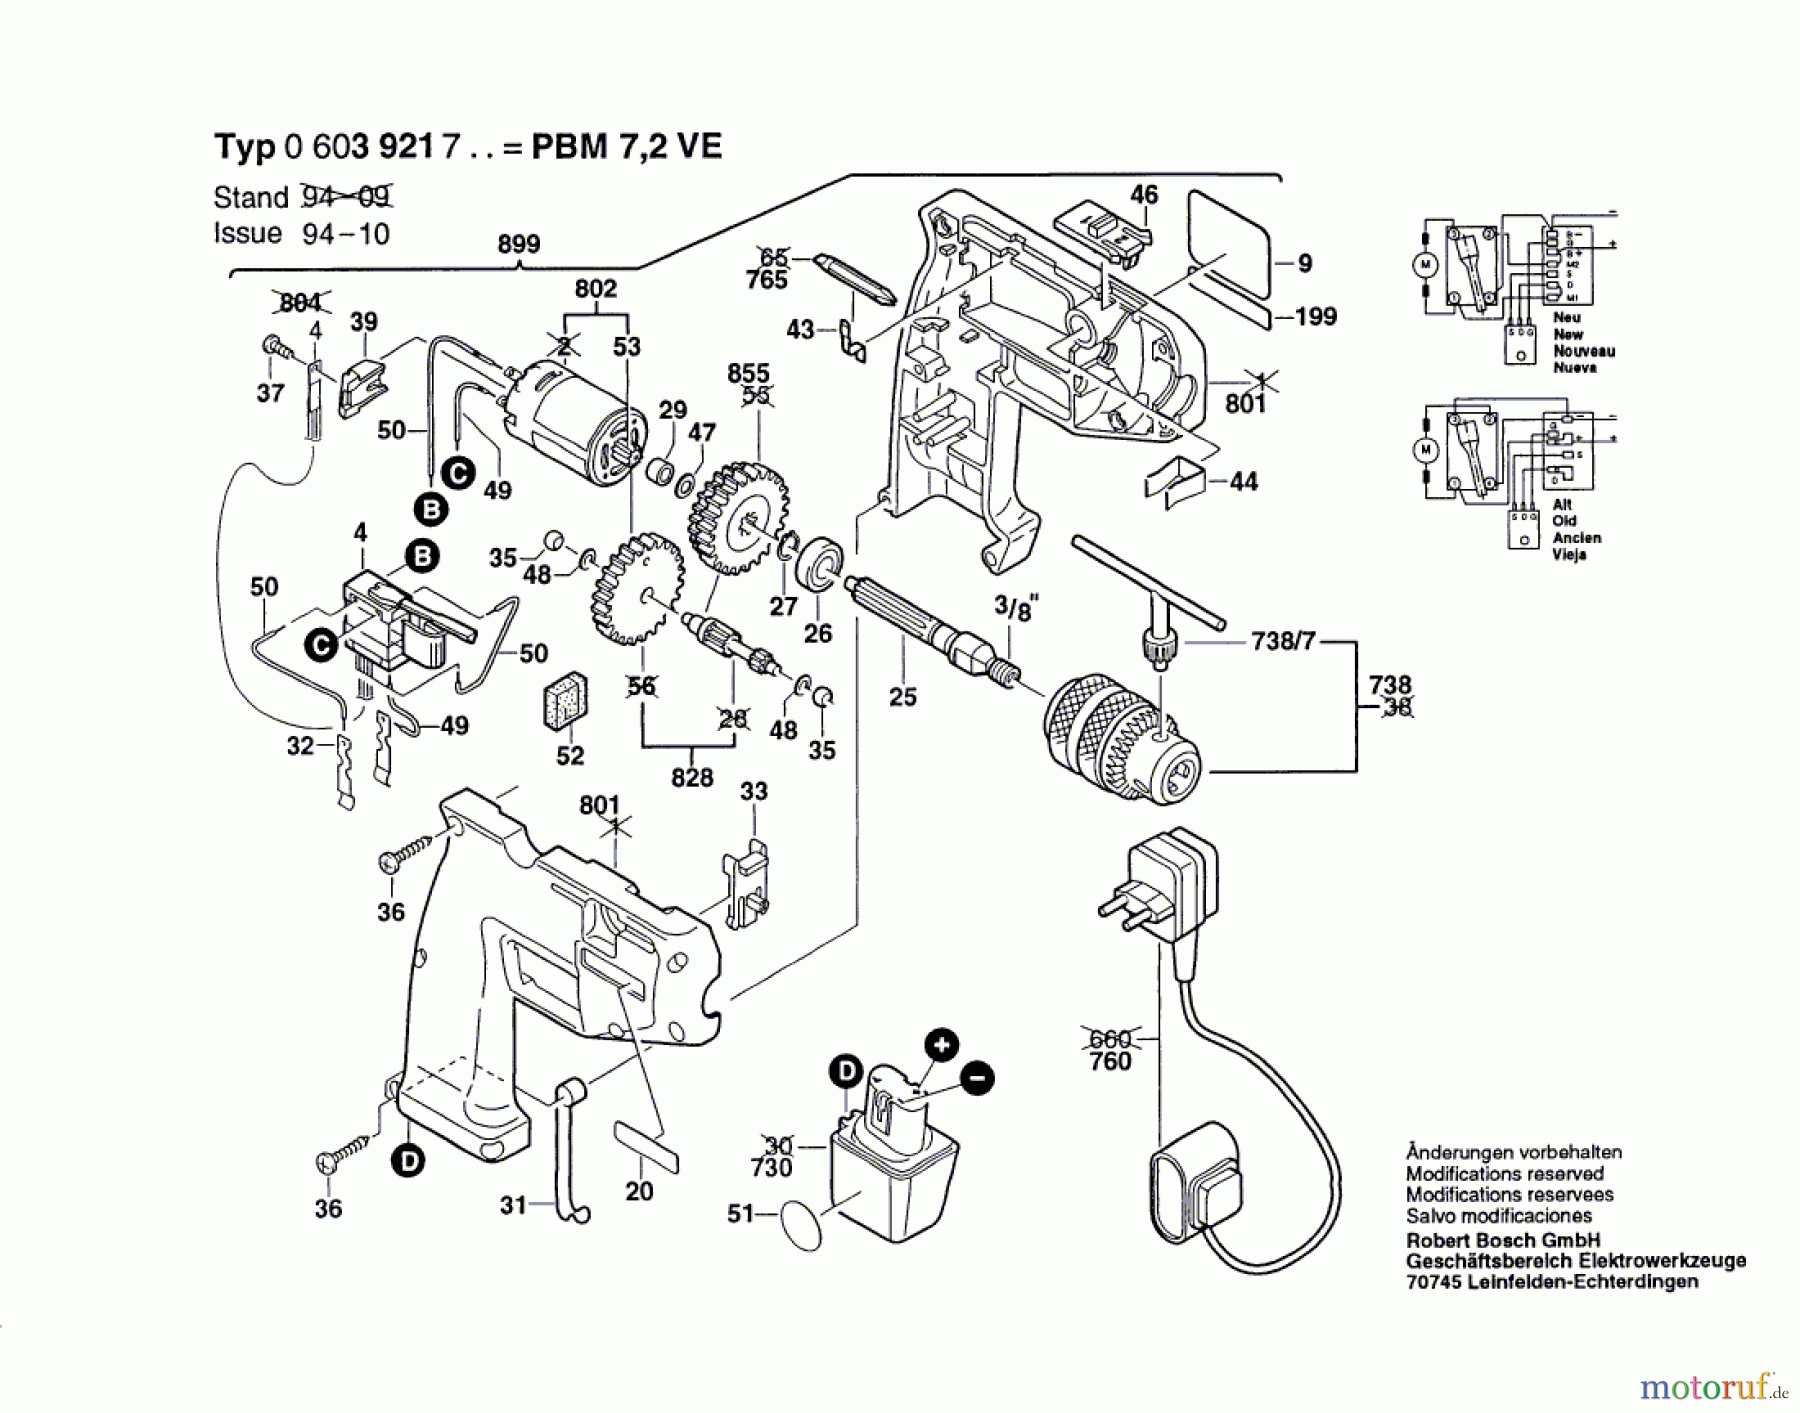  Bosch Akku Werkzeug Akku-Bohrmaschine PBM 7,2 VE Seite 1